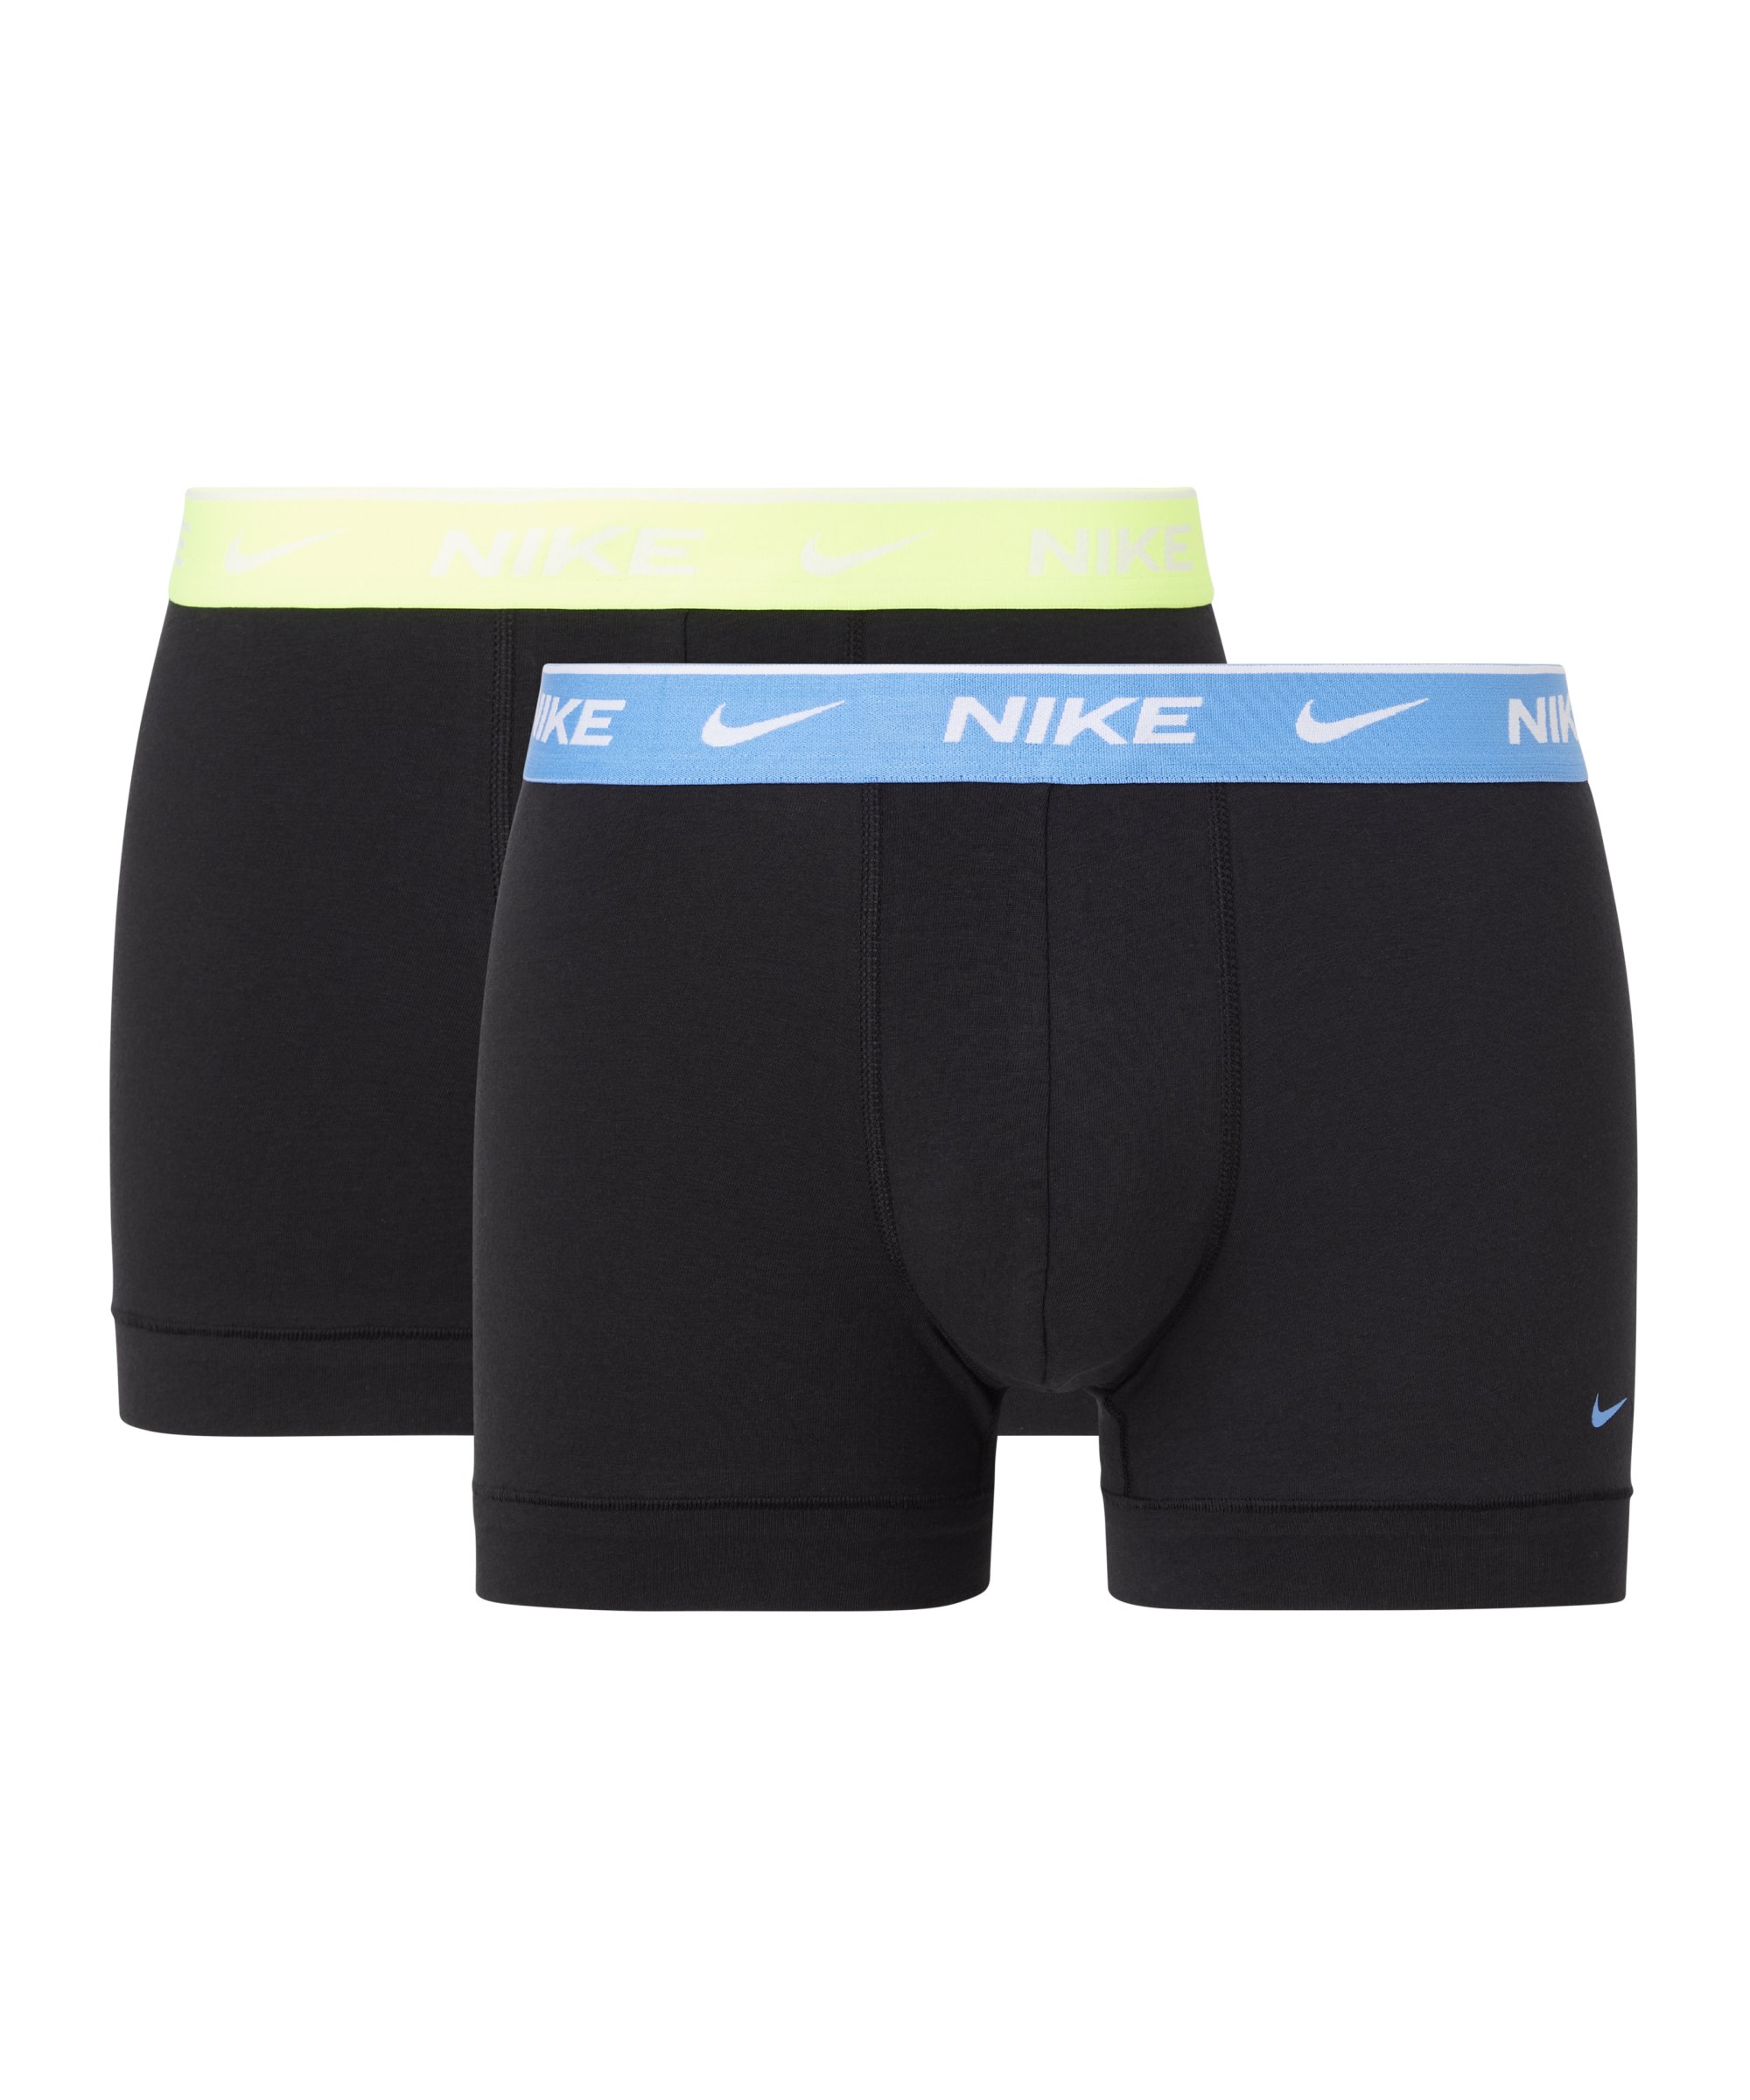 Nike Cotton Trunk Boxershort 2er Pack Schwarz FAN3 - schwarz